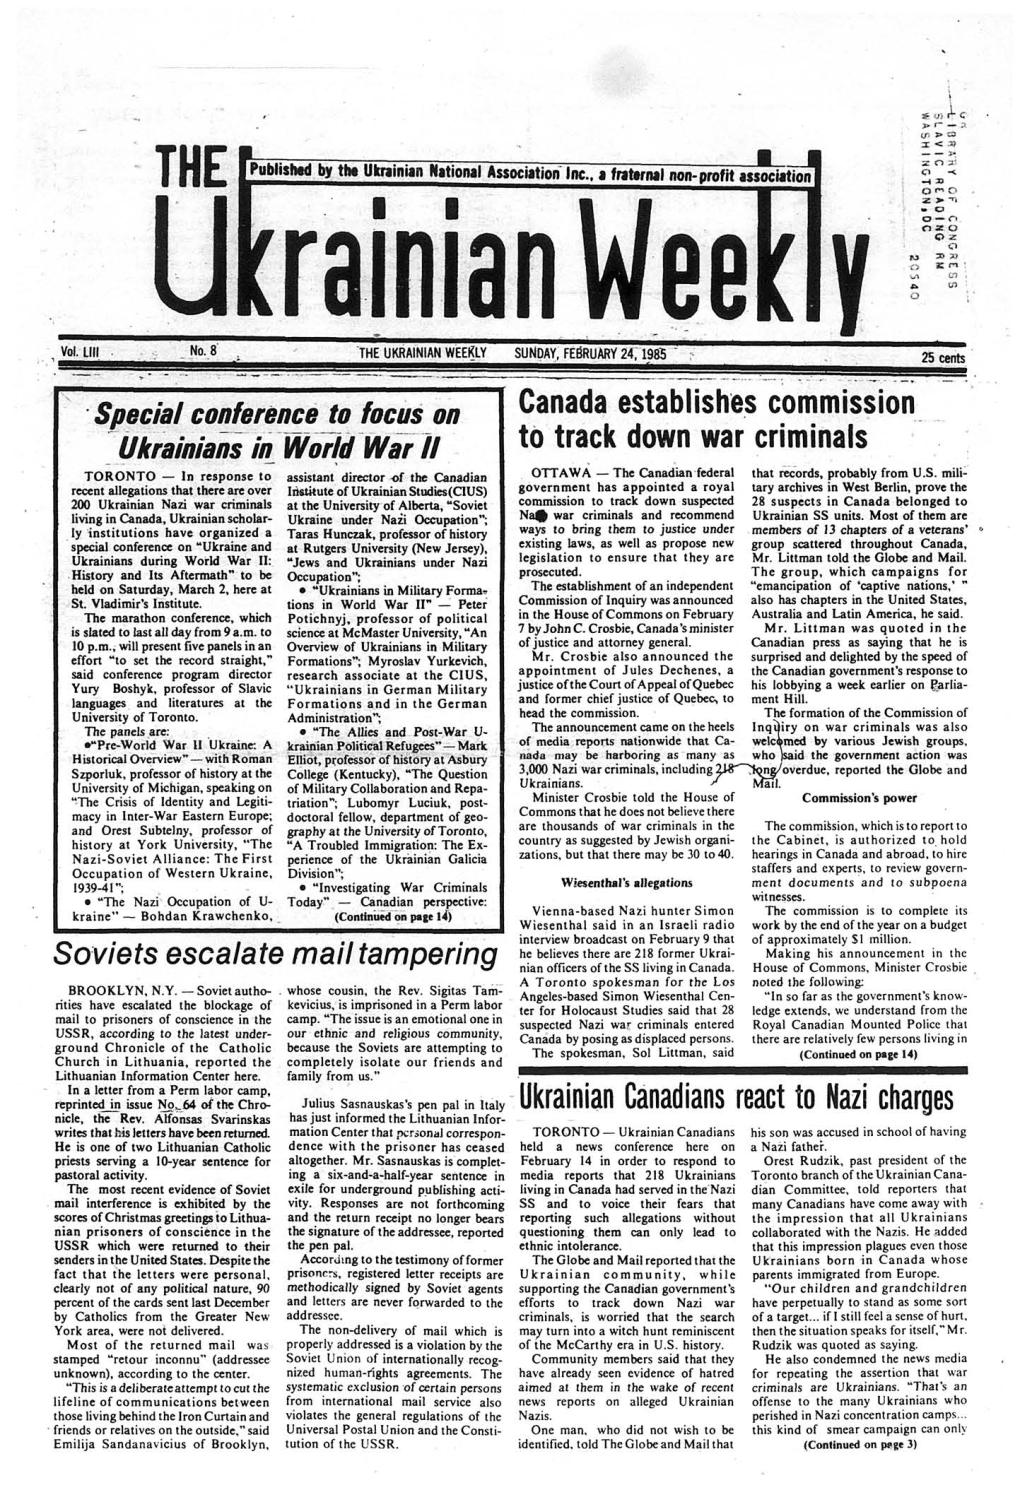 The Ukrainian Weekly 1985, No.8